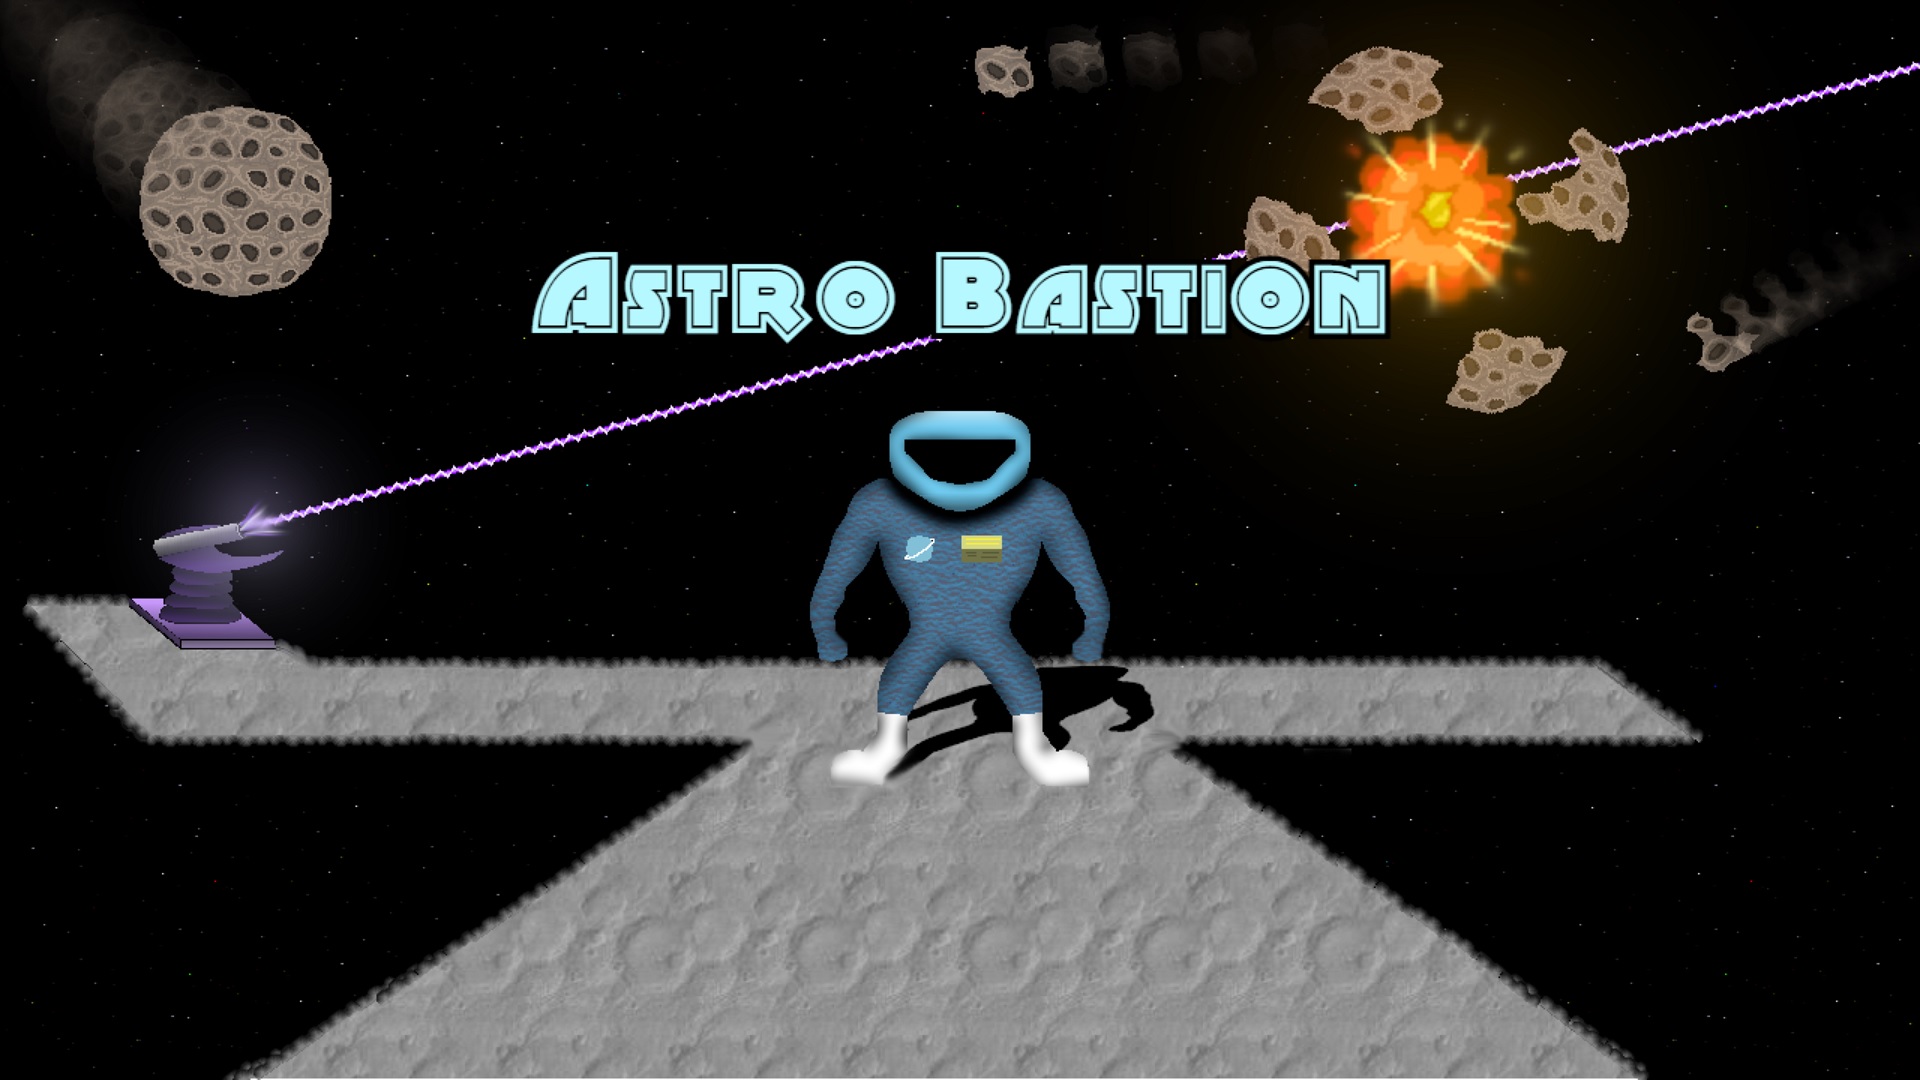 Astro Bastion